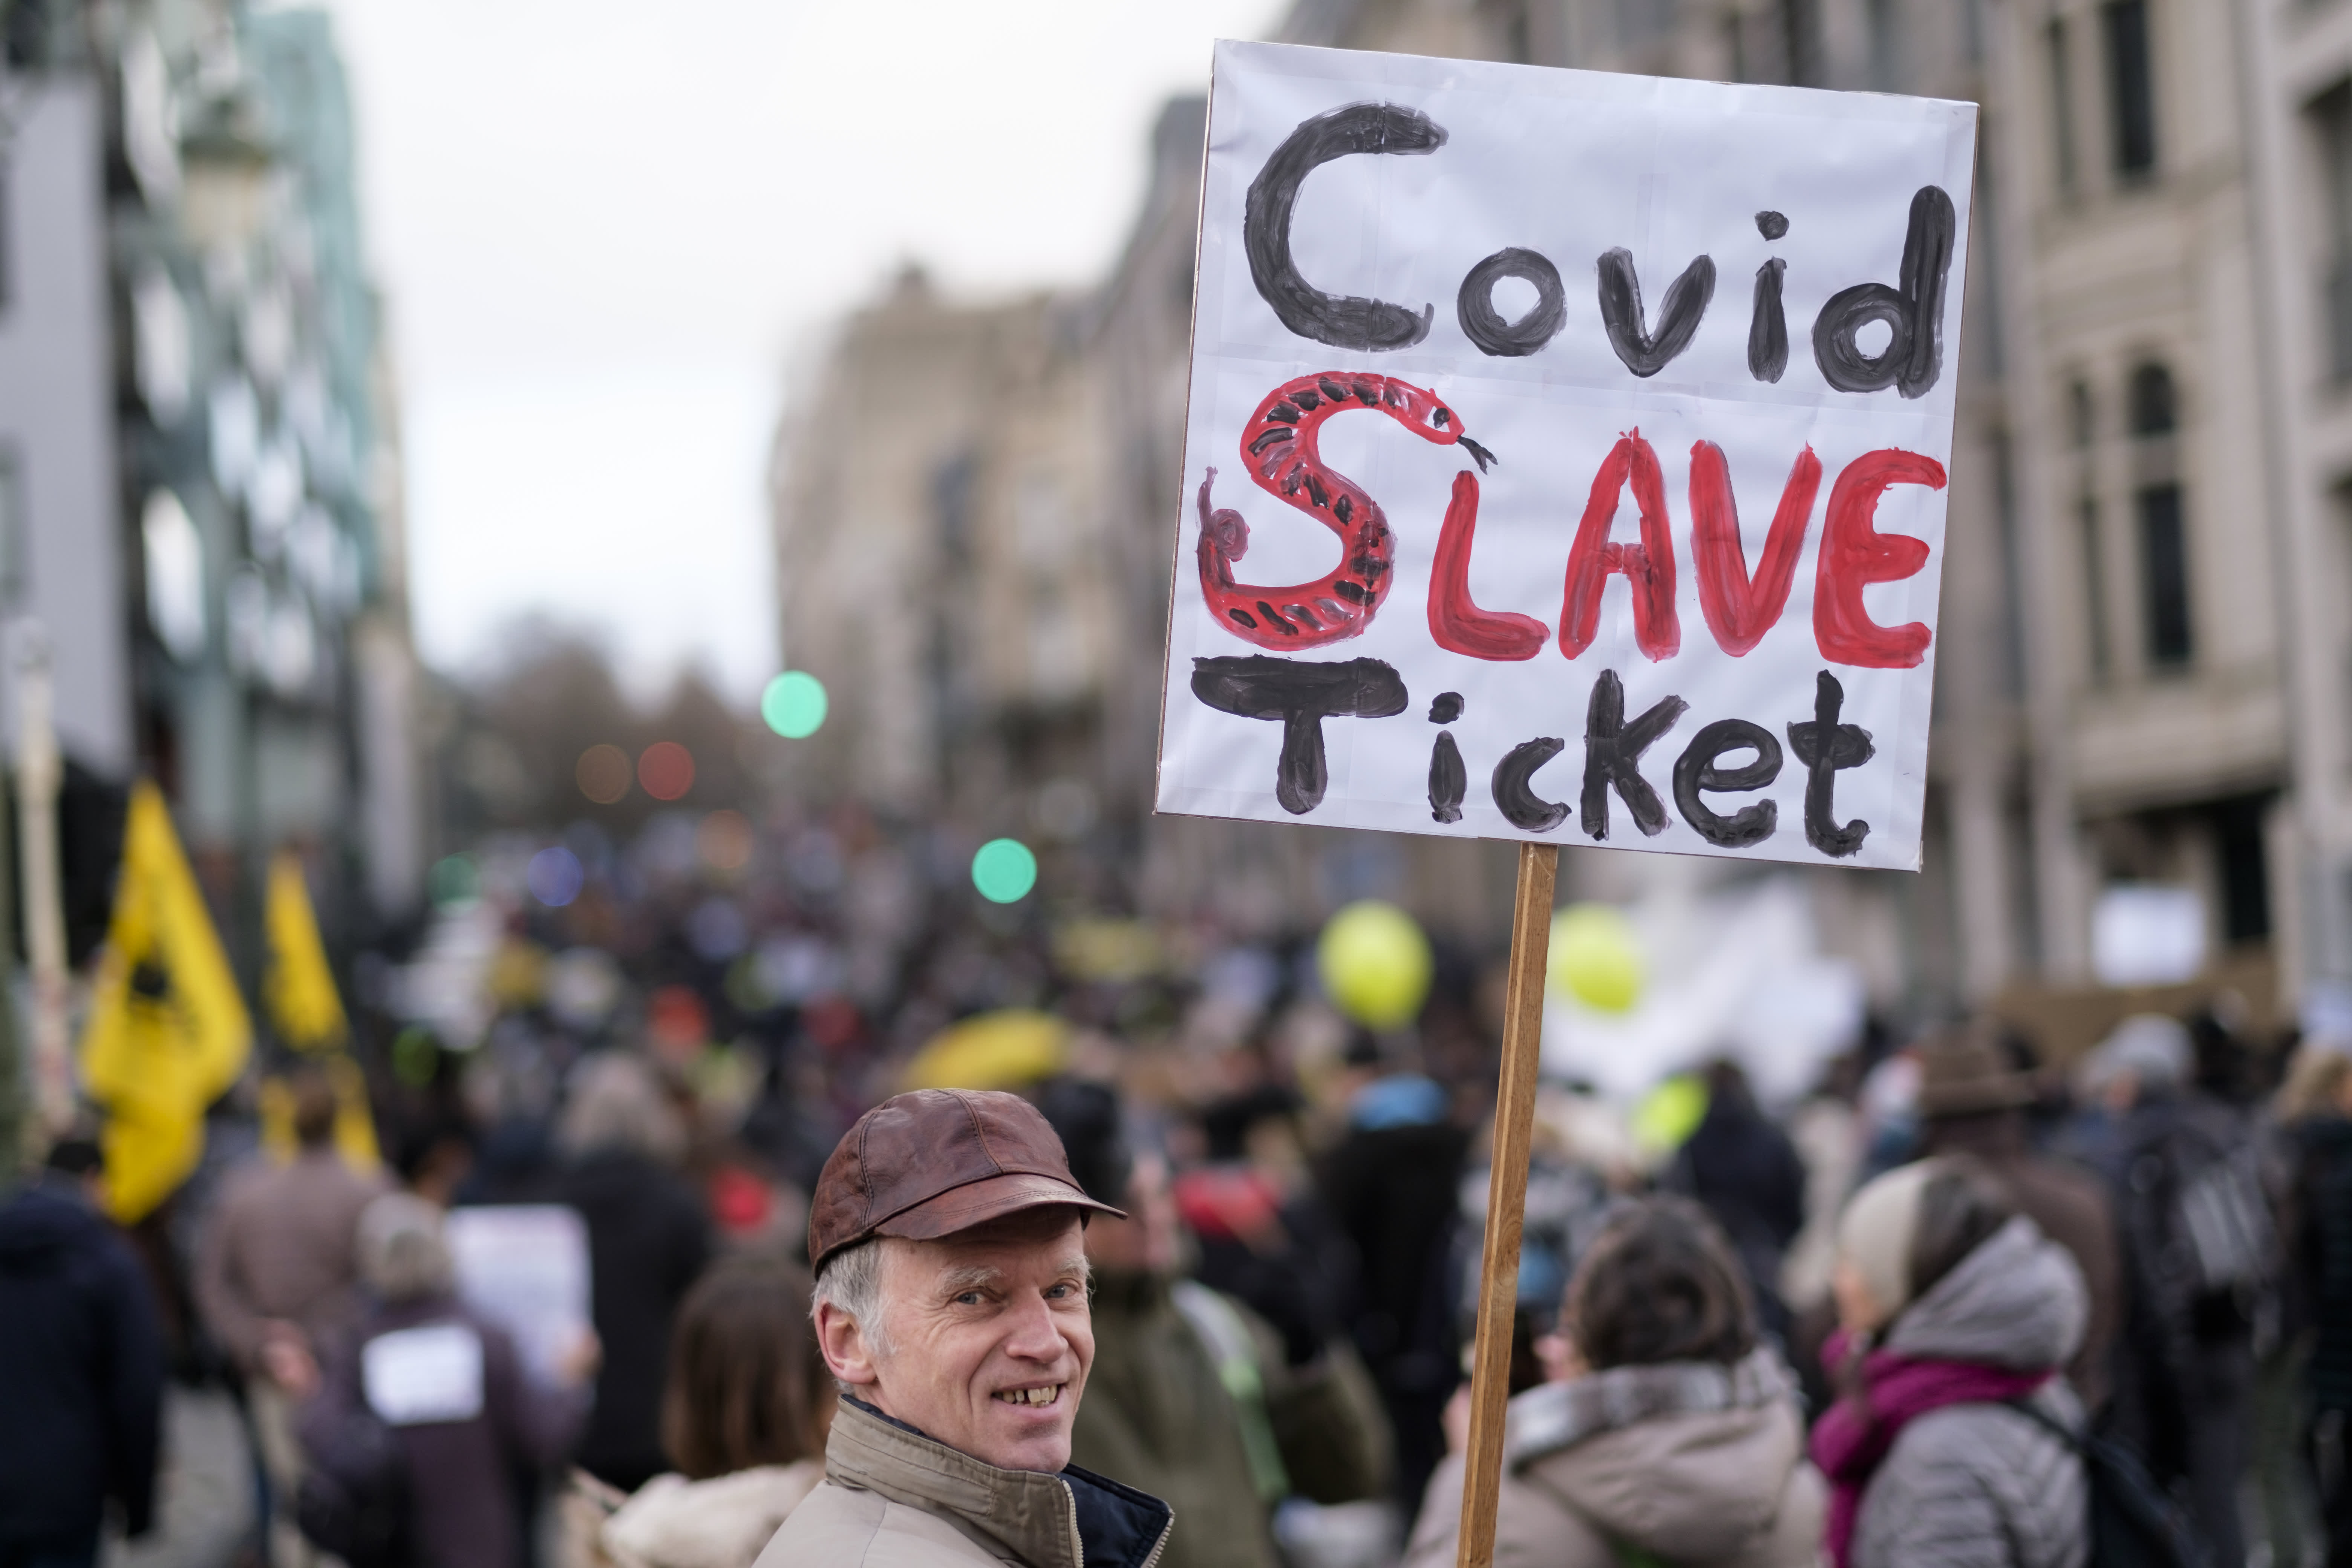 WEF report warns of Covid inequalities fueling social tensions